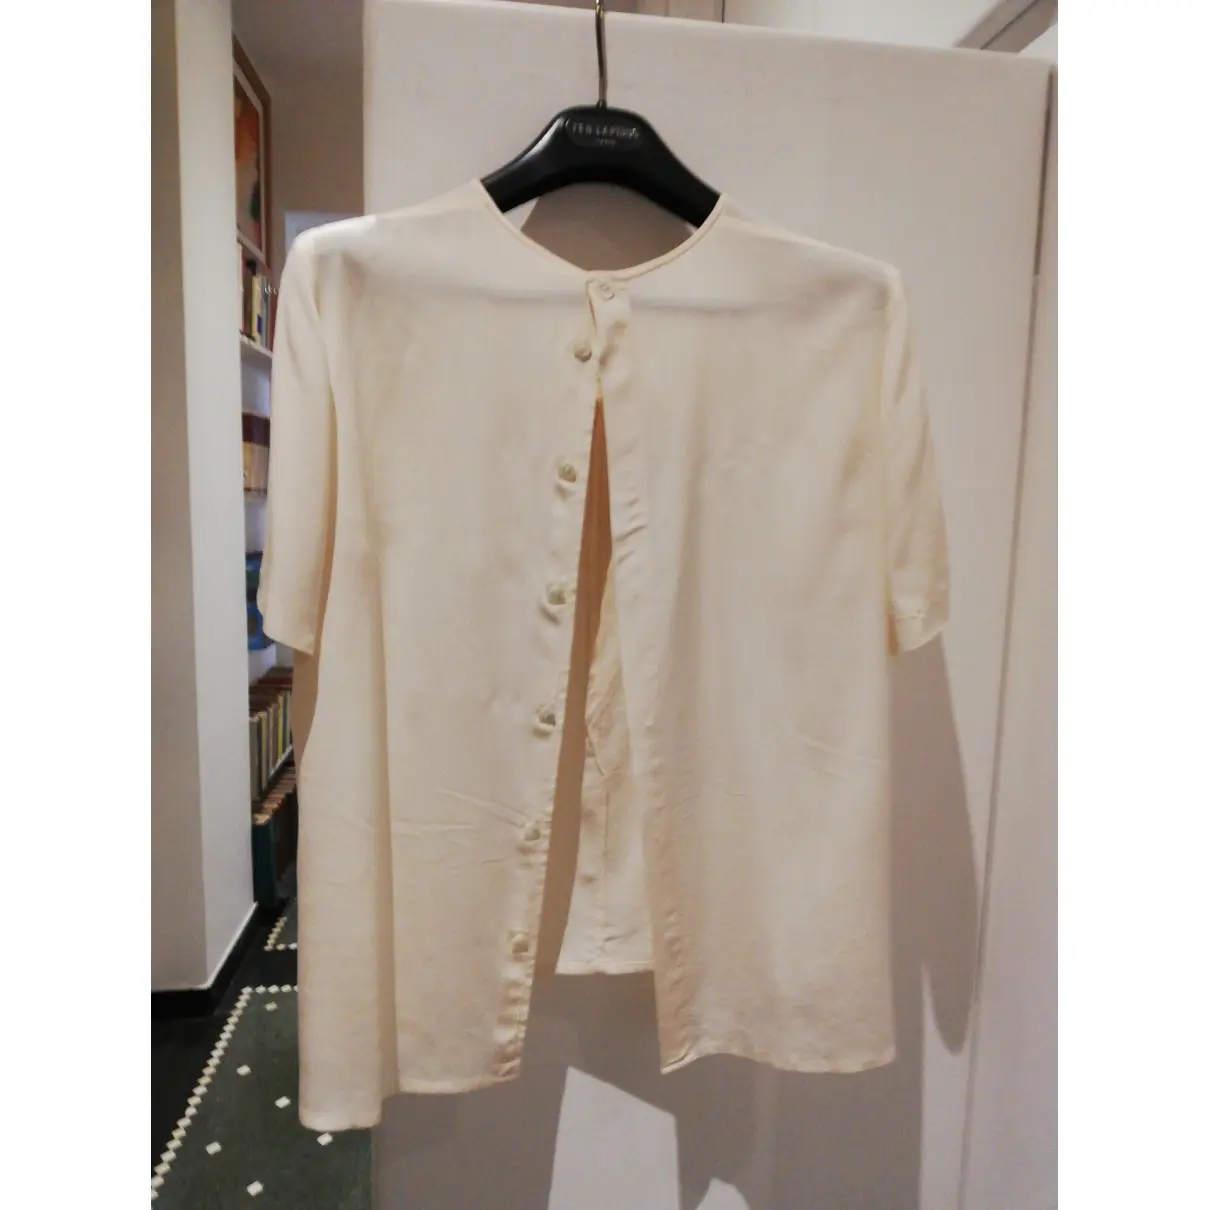 Salvatore Ferragamo Silk blouse for sale - Vintage